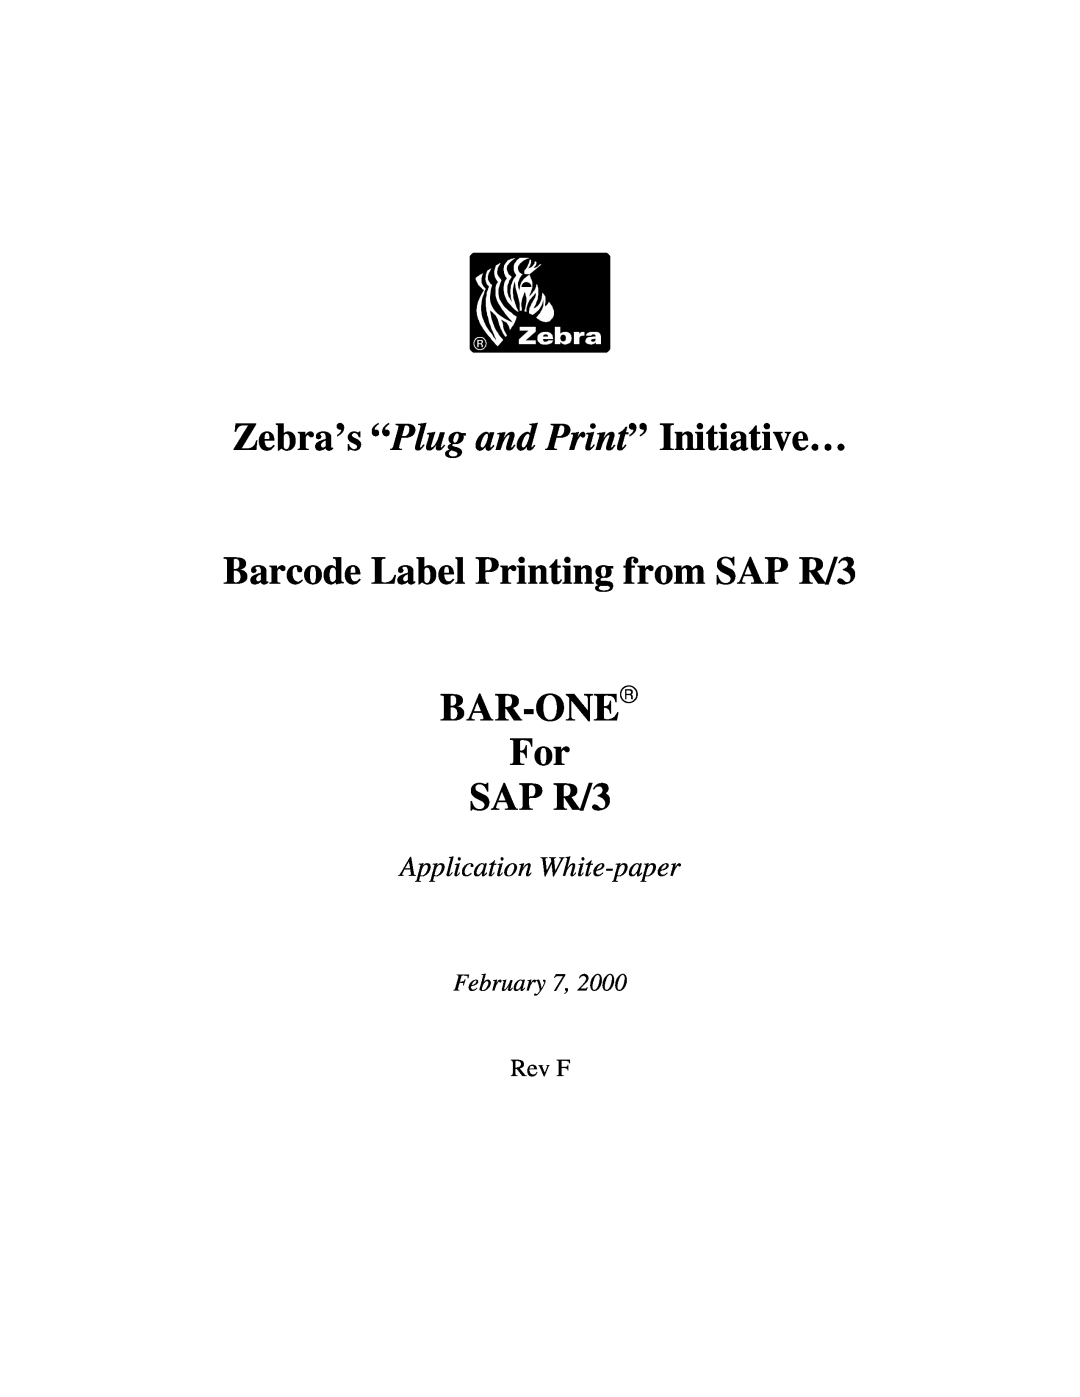 Zebra Technologies SAP R/3 manual Application White-paper, Zebra’s “Plug and Print” Initiative…, February 7, Rev F 